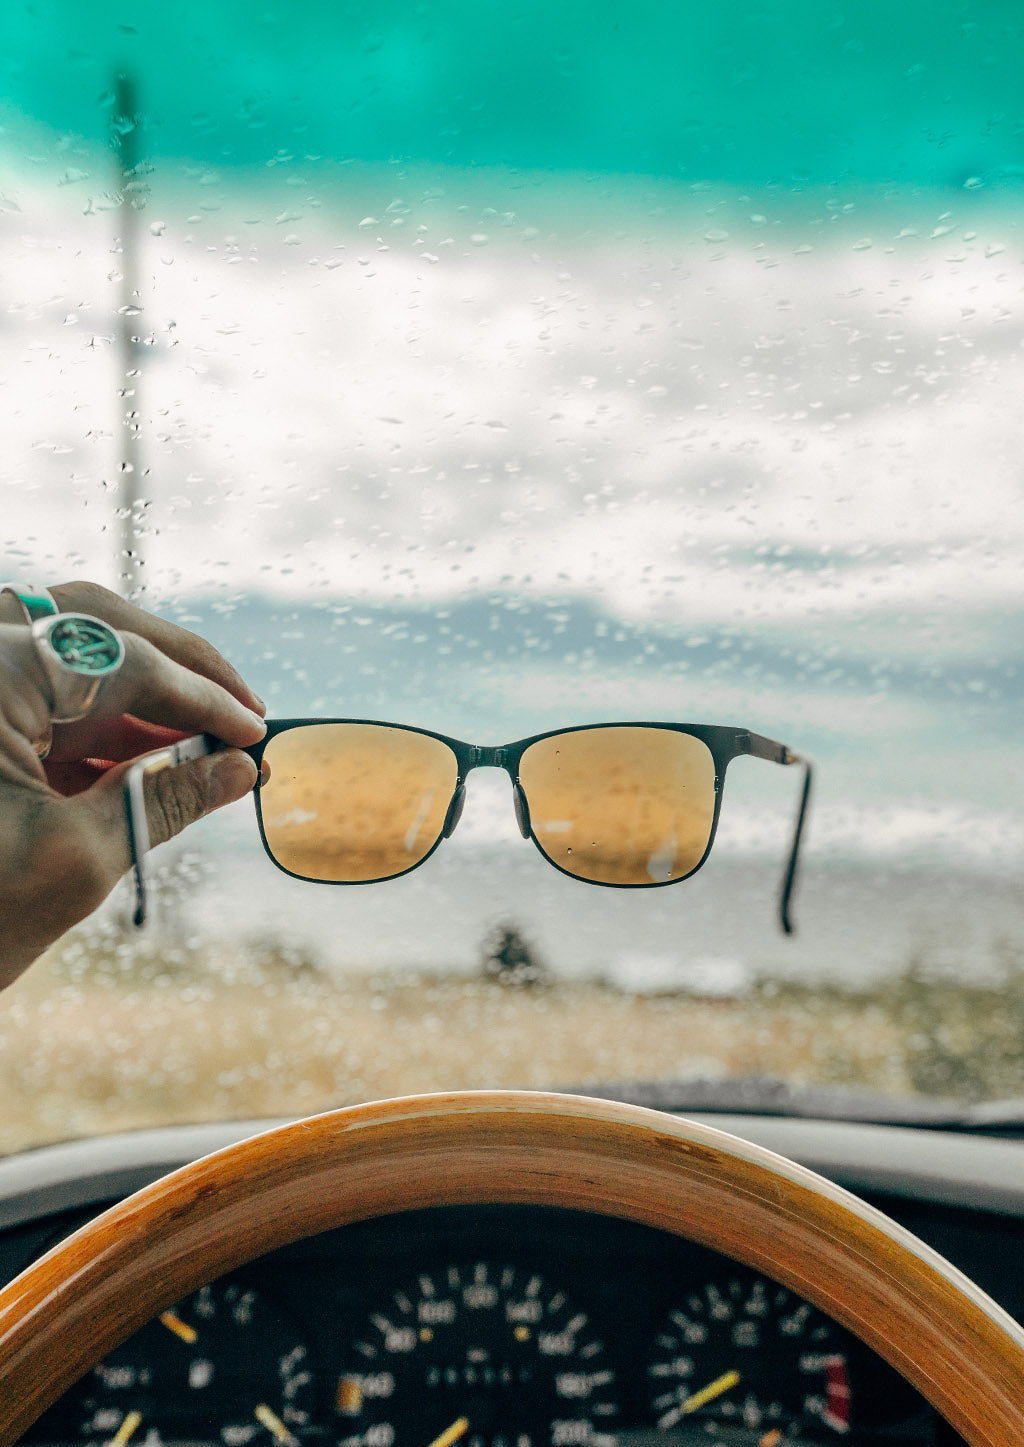 Foldable sunglasses - Rover classic wayfarer design - Lifestyle photo in car